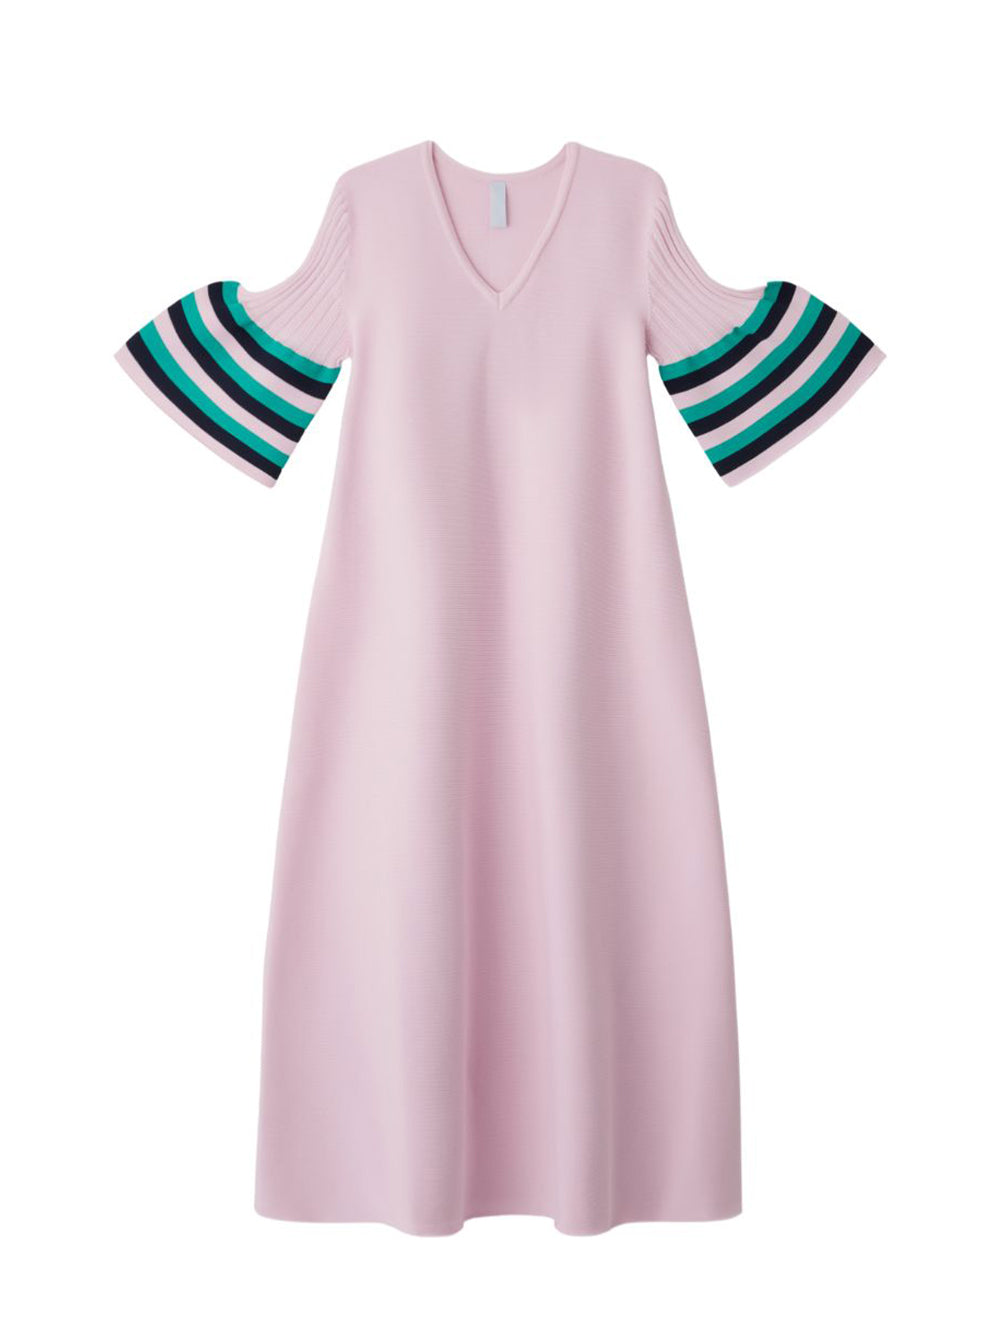 Pottery Short Bell Sleeve Flare Dress (Pastel Pink Multi)